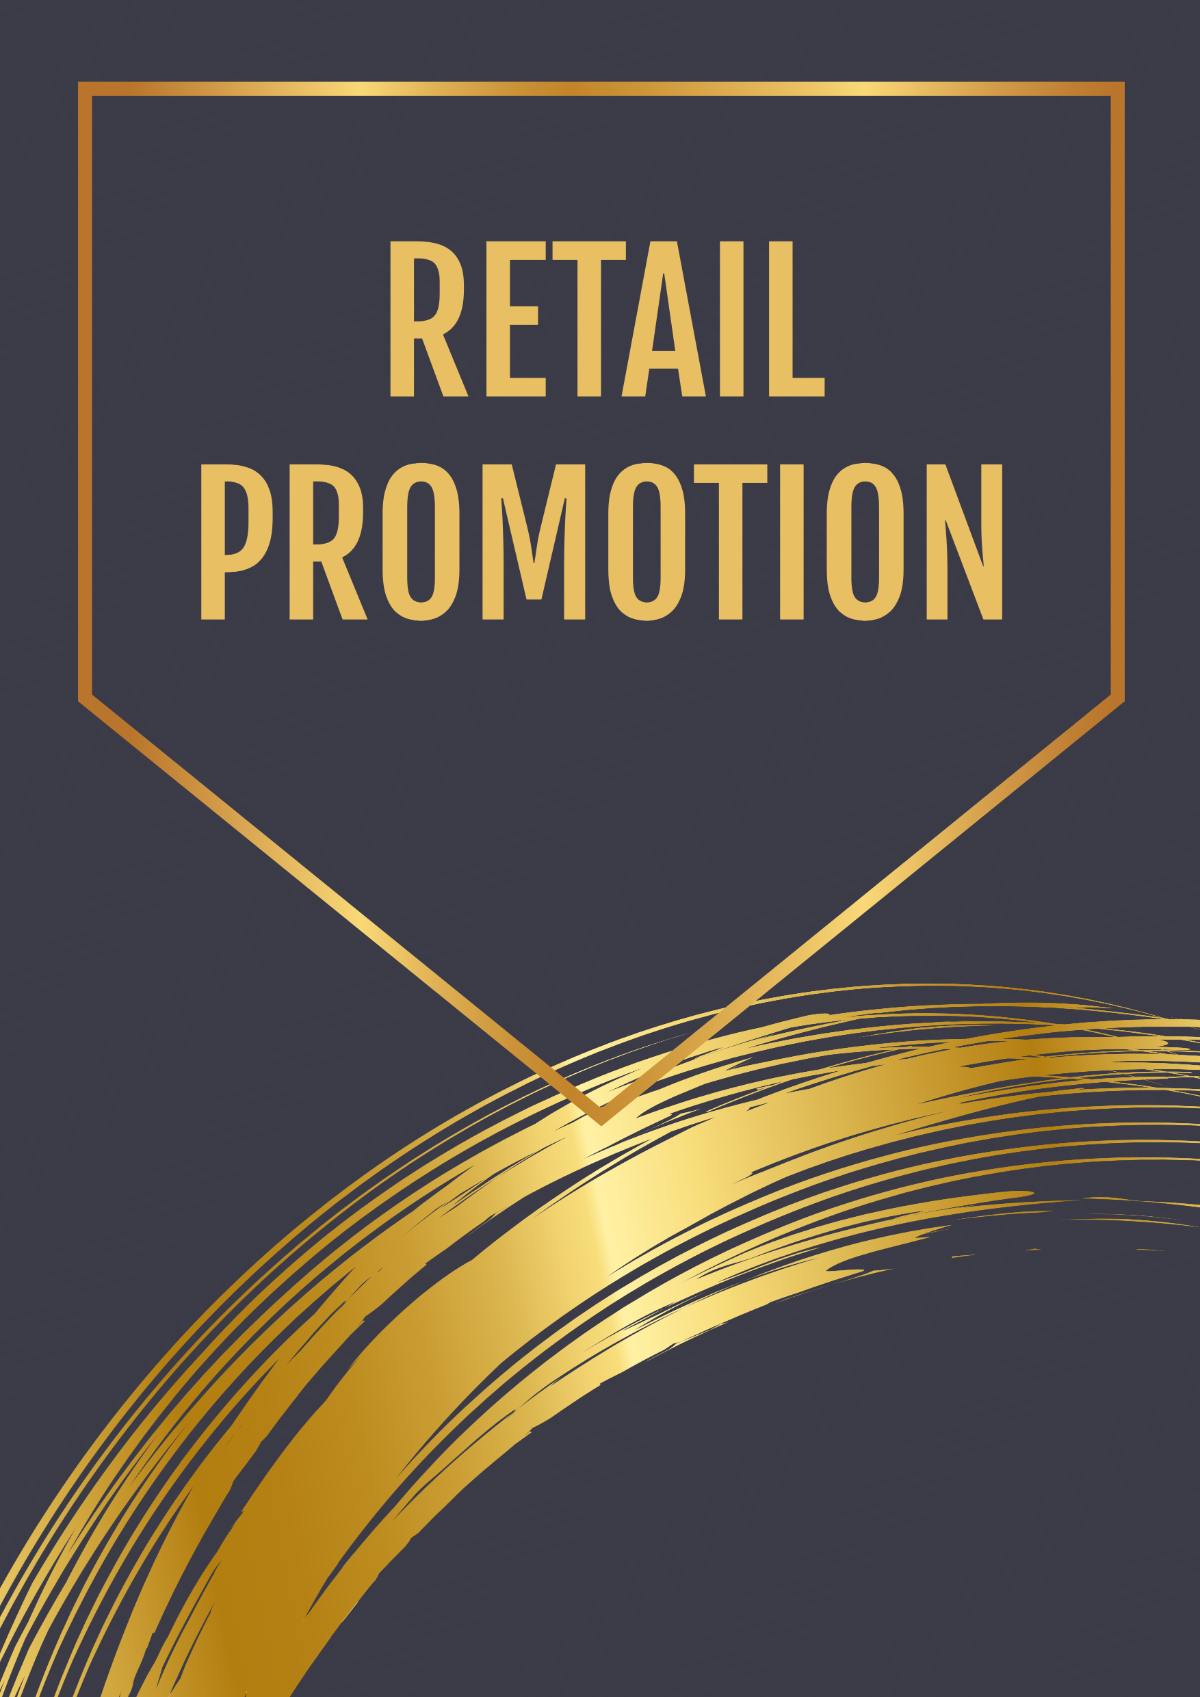 Retail Promotion Signage